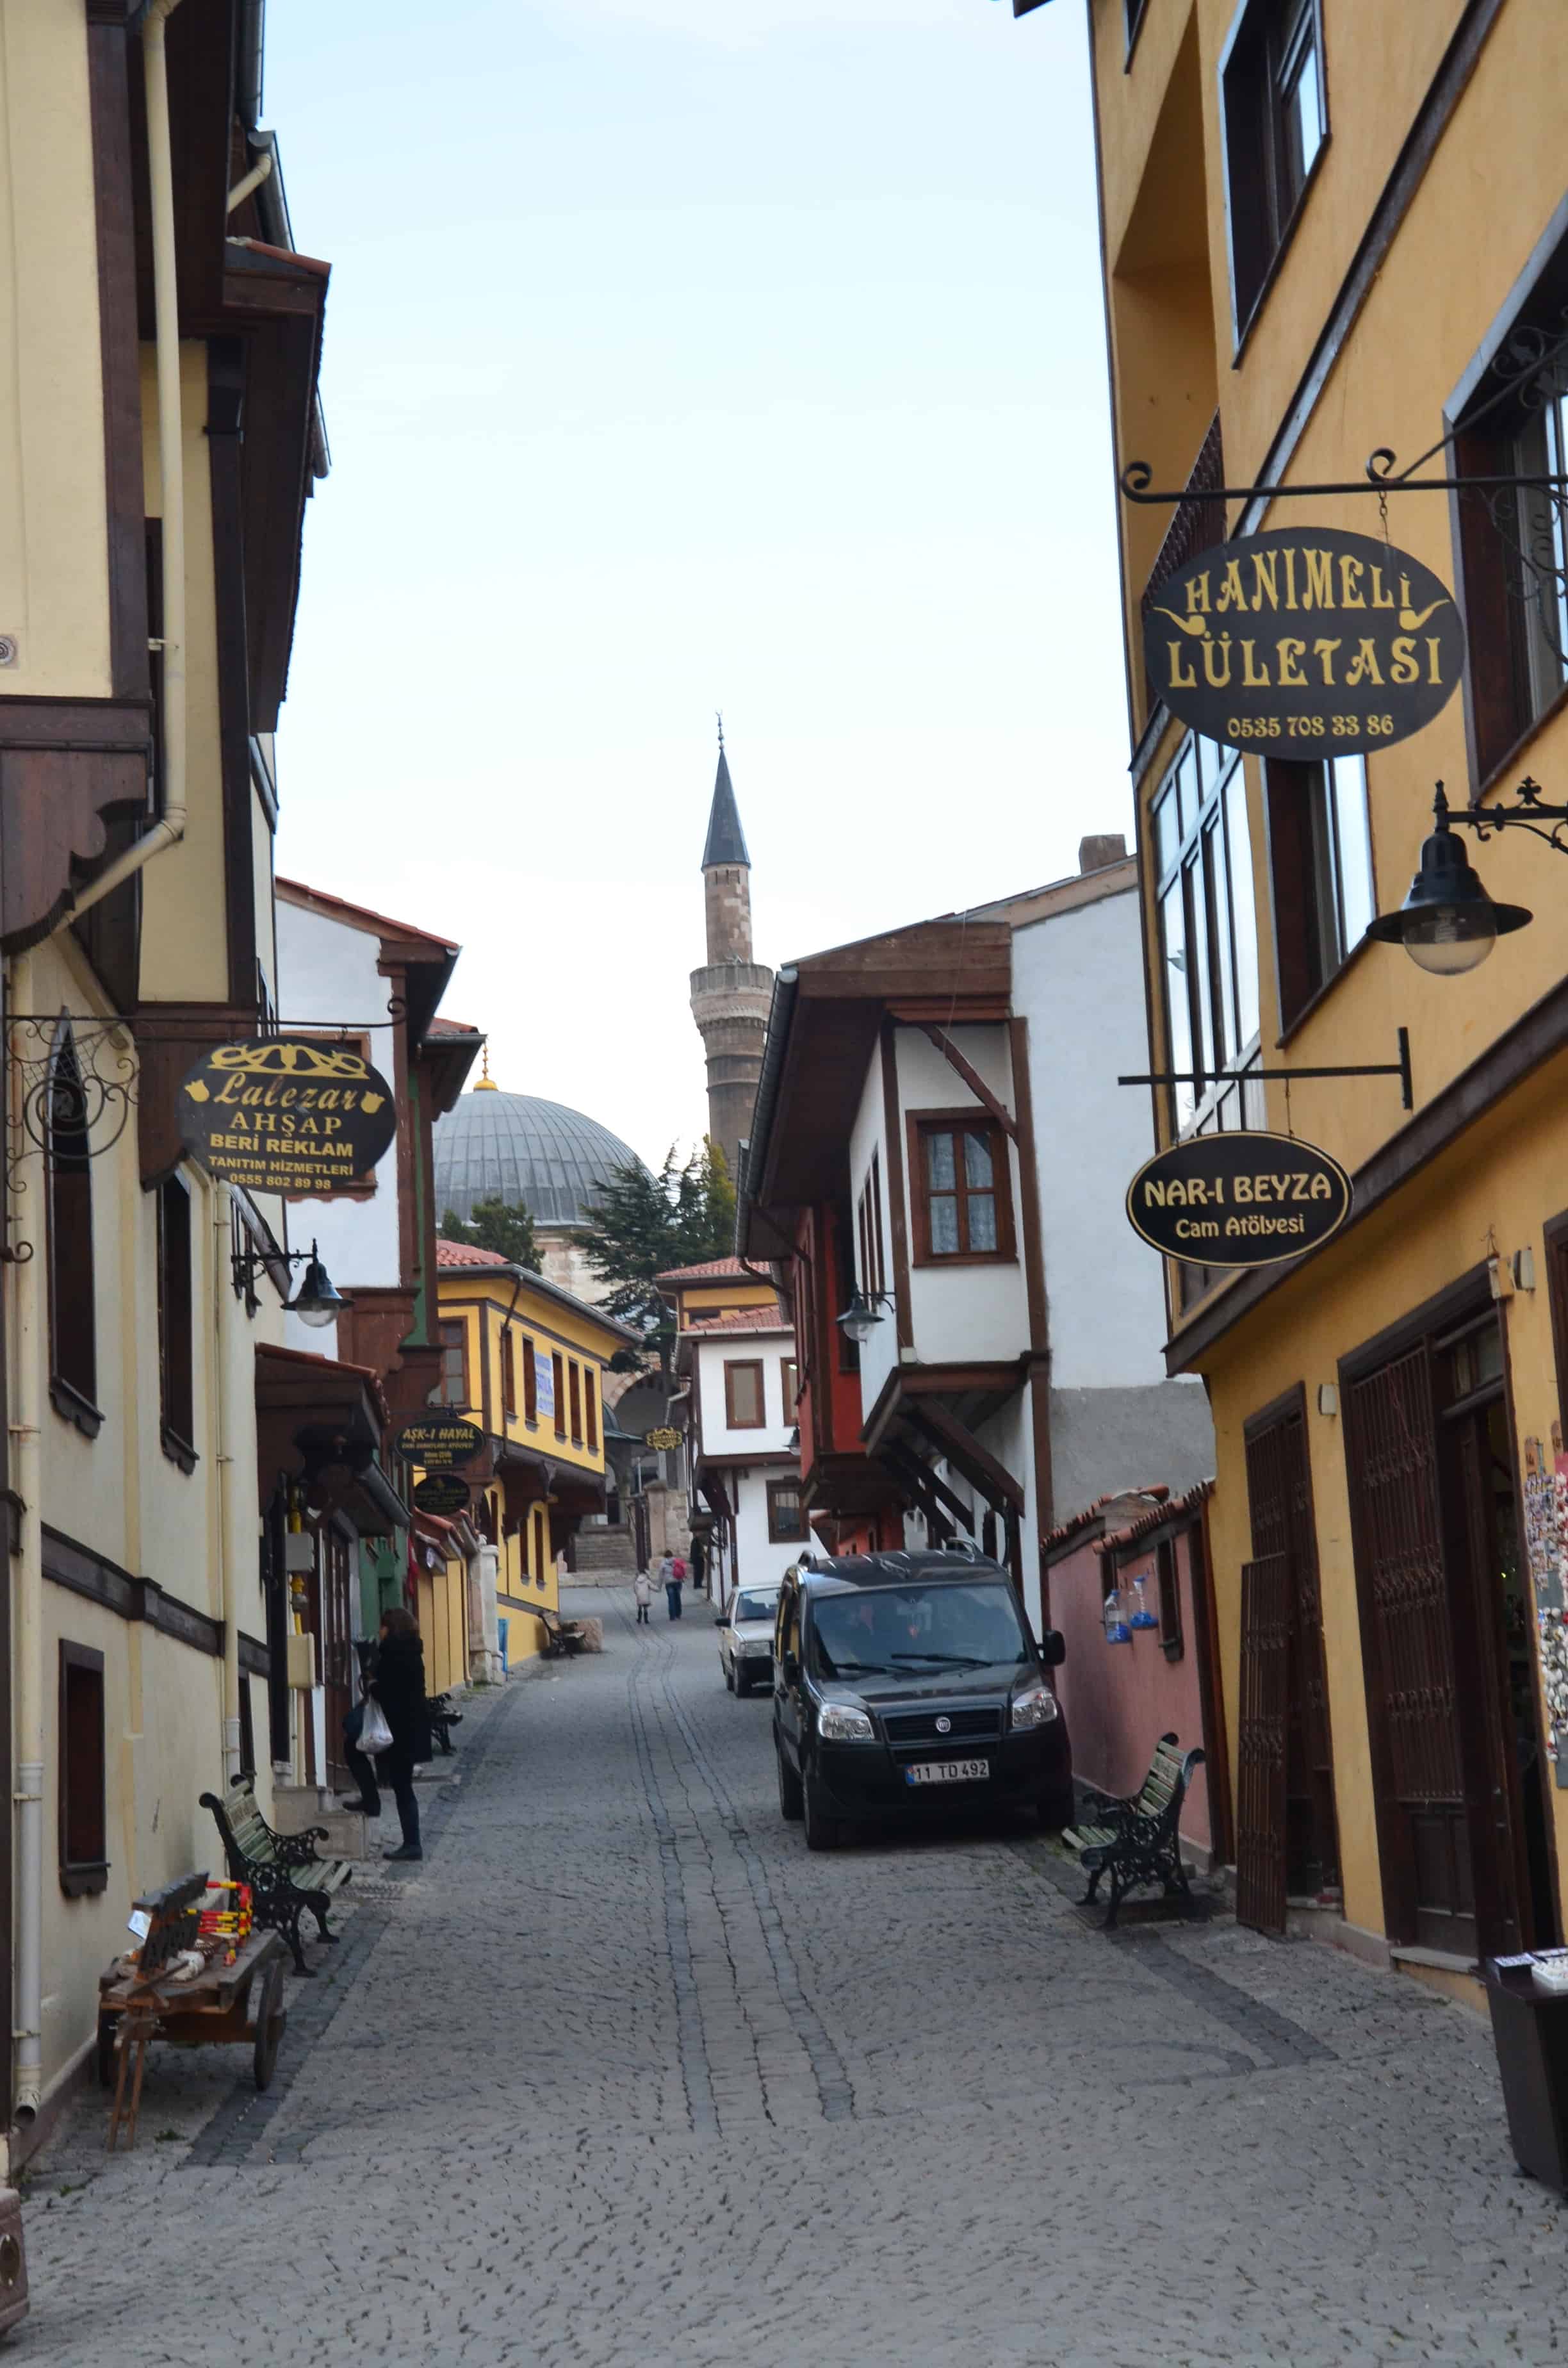 A narrow street in Odunpazarı in Eskişehir, Turkey